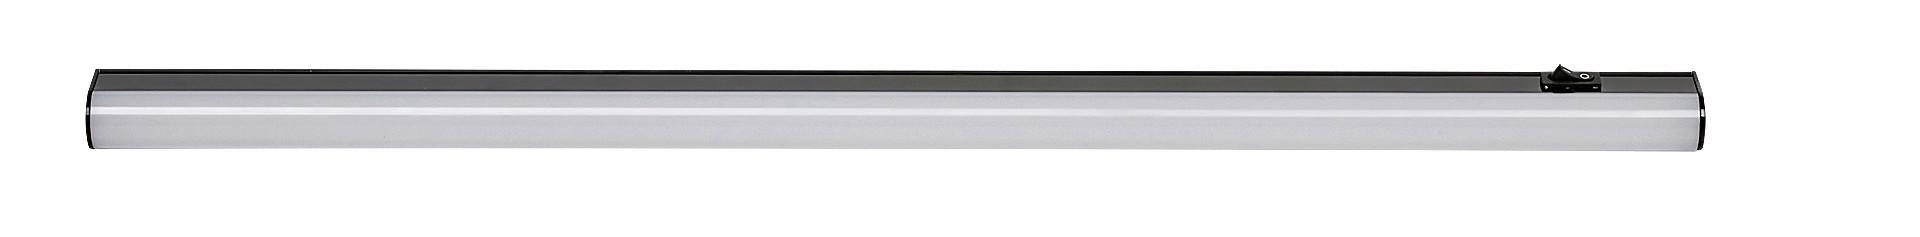 Pultmegvilágító Lámpa Greg 31cm - Basics, Műanyag (31/2/3cm) - Rabalux